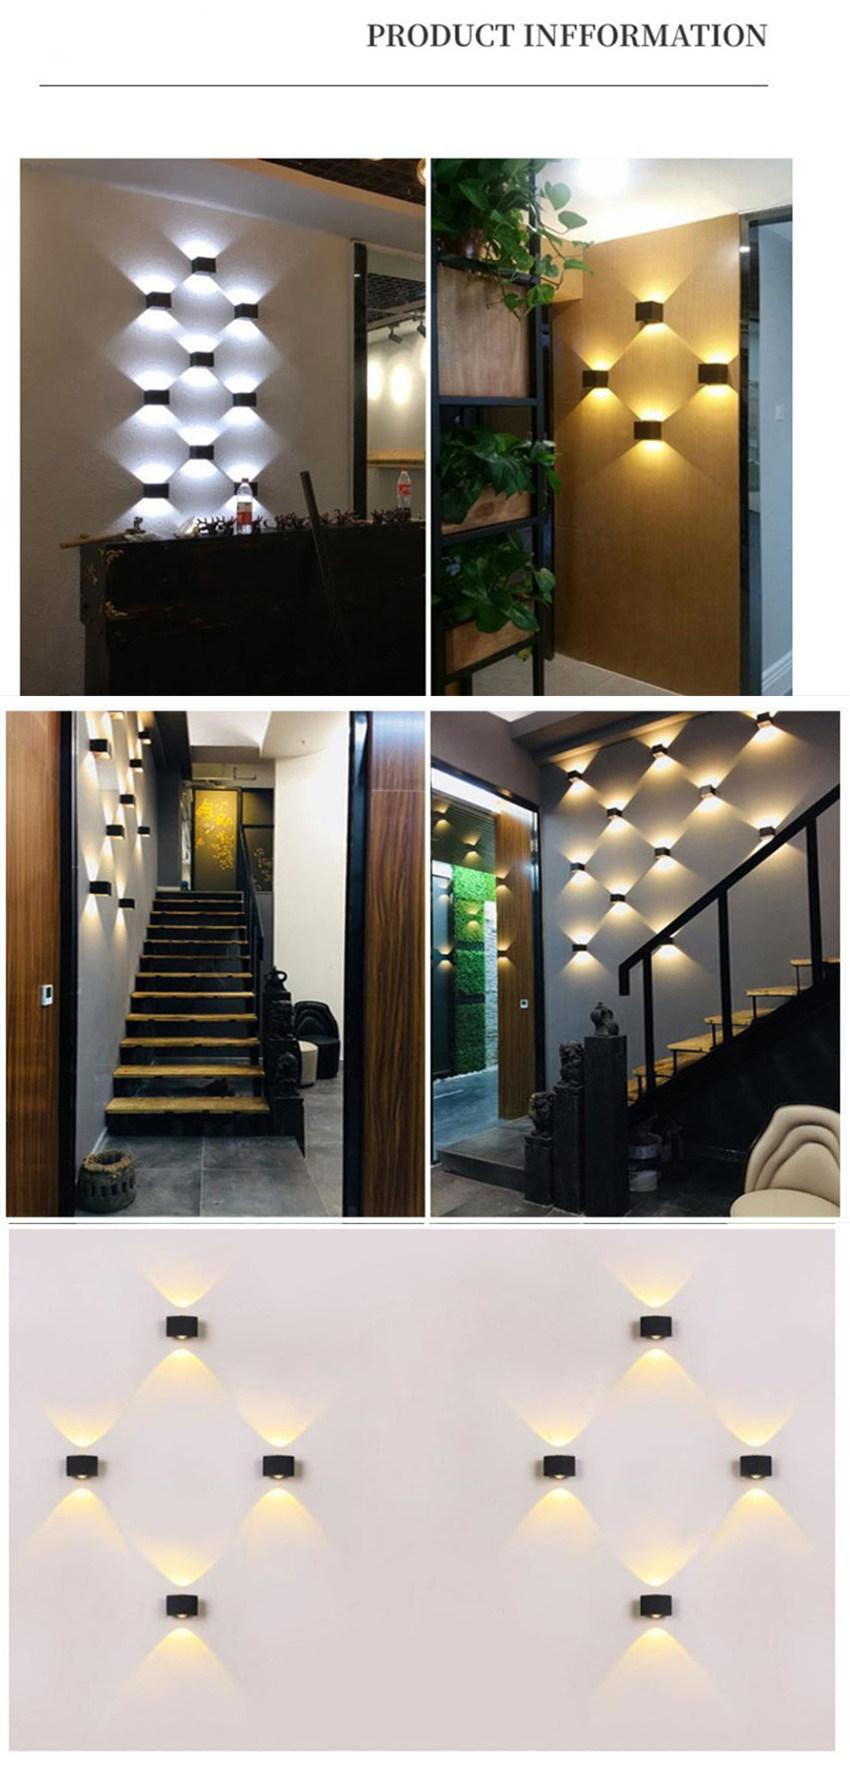 IP64 Waterproof Dimmer LED Wall Lamp for Indoor Outdoor